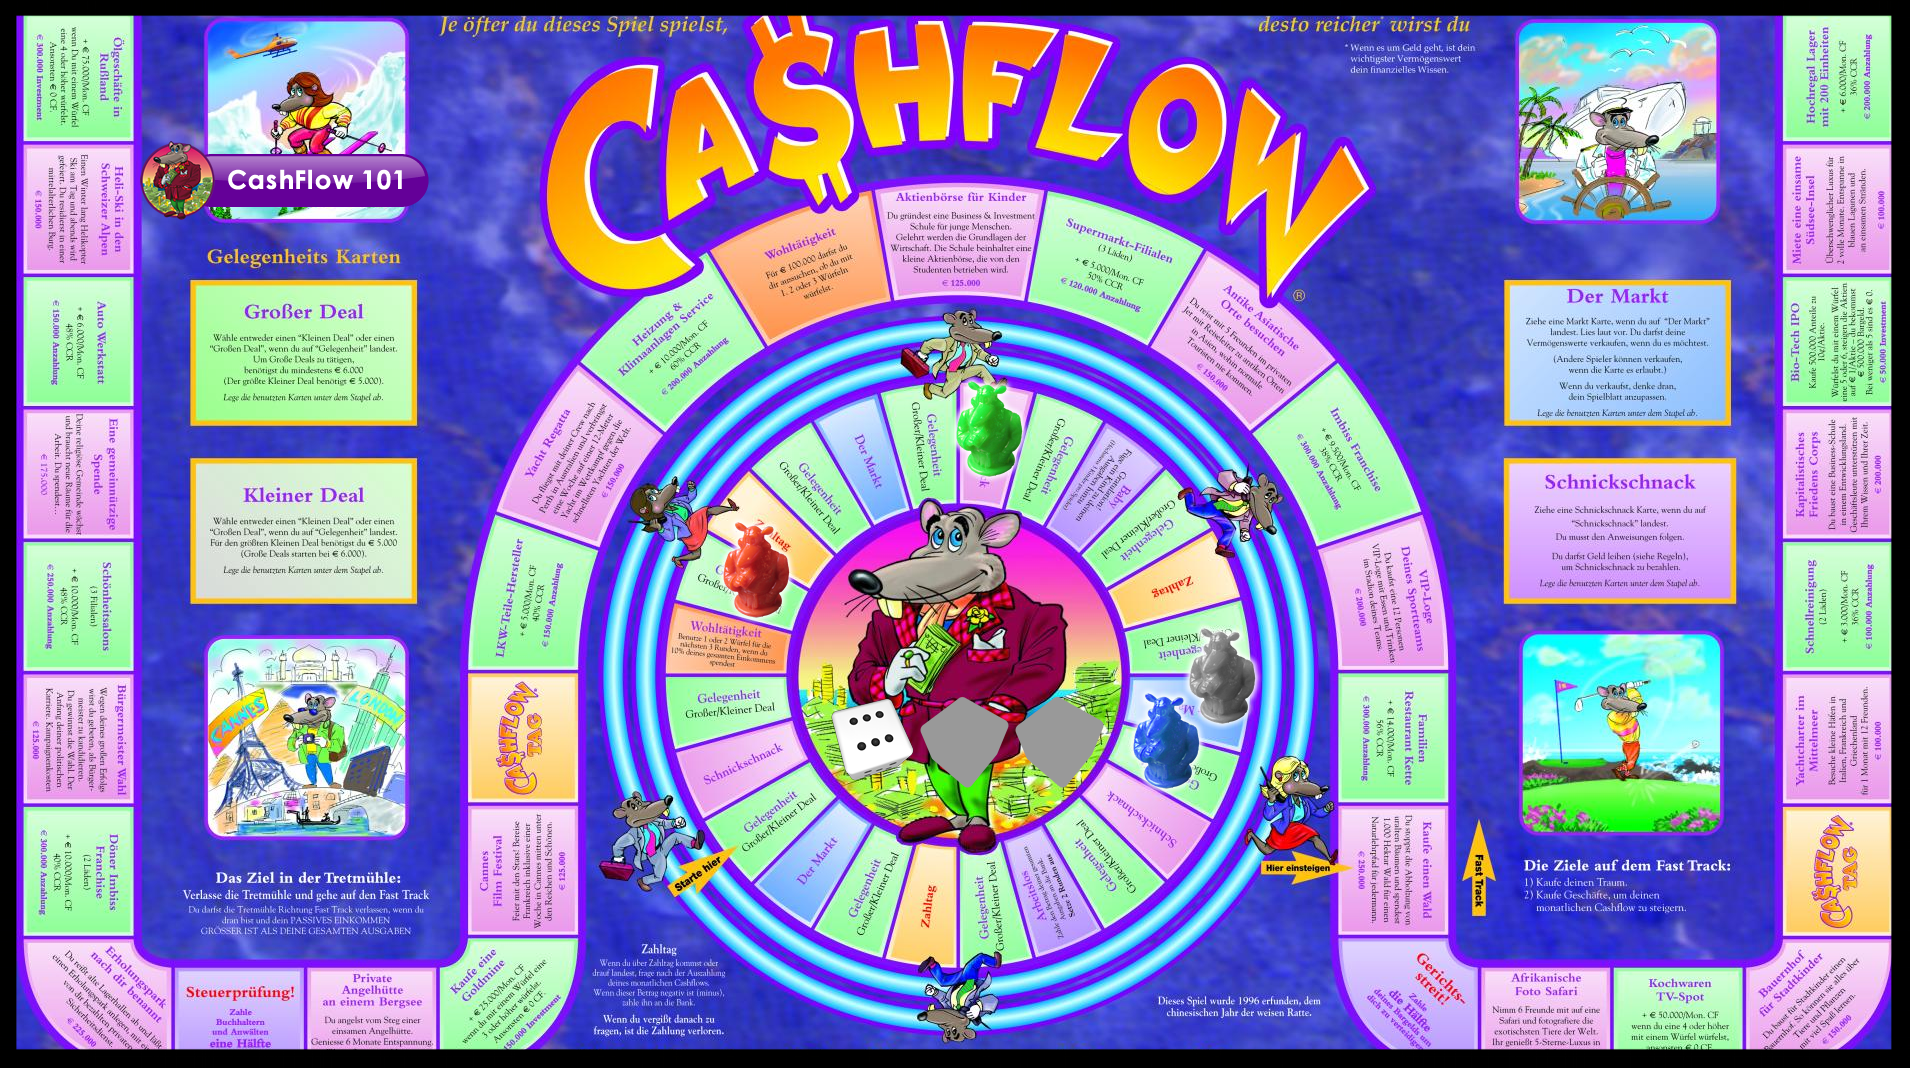 what is cashflow 101